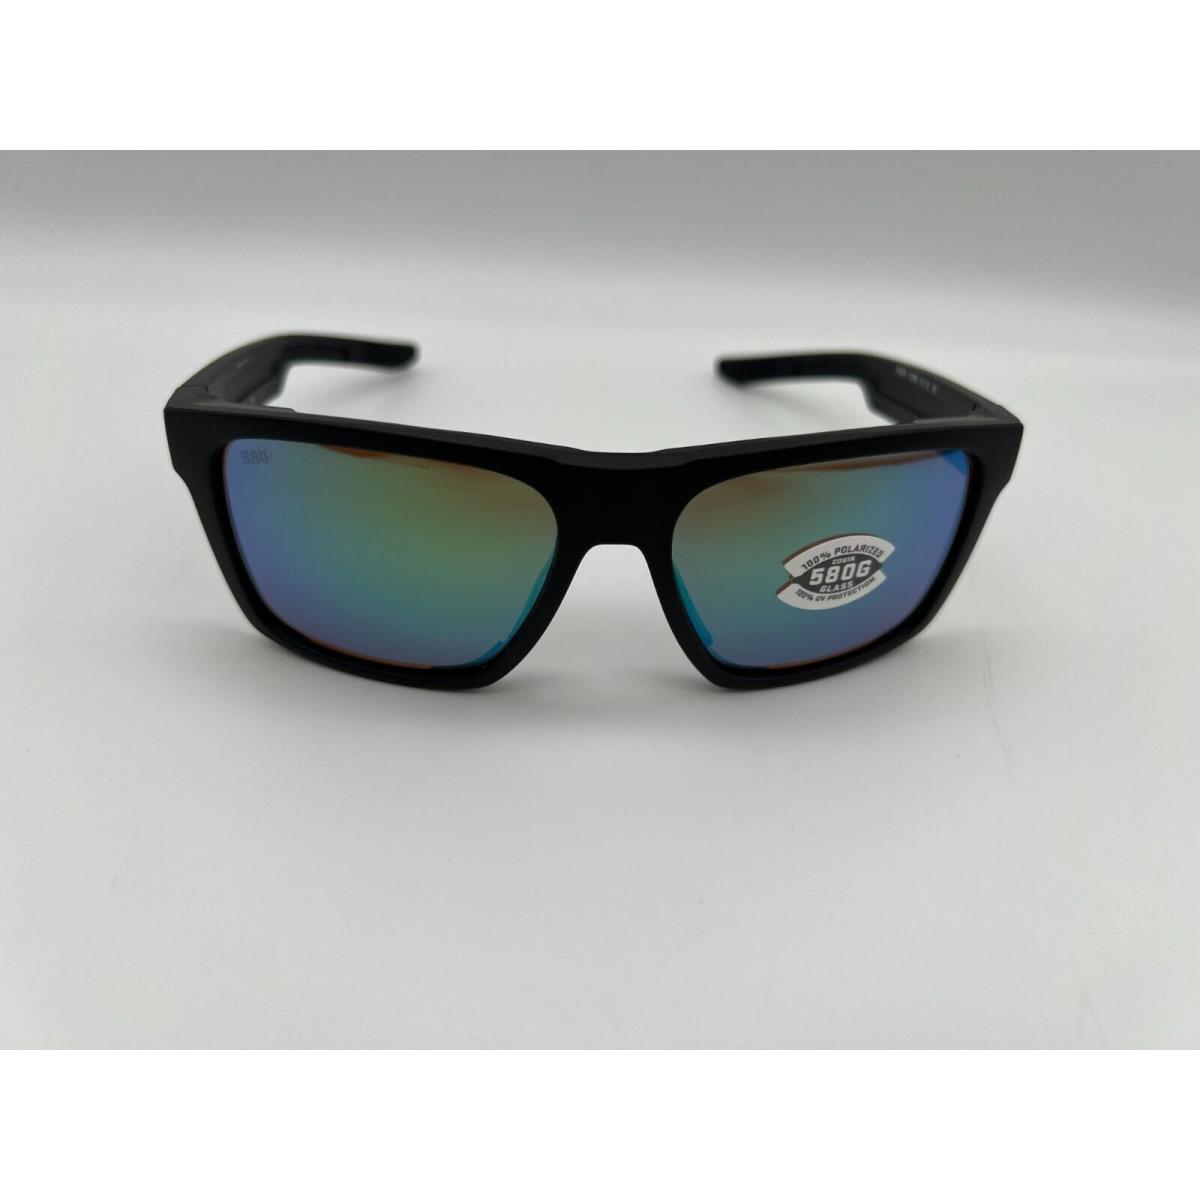 Costa Del Mar Lido Polarized Sunglasses Matte Black/green Mirror Glass 580G - Frame: Black, Lens: Green